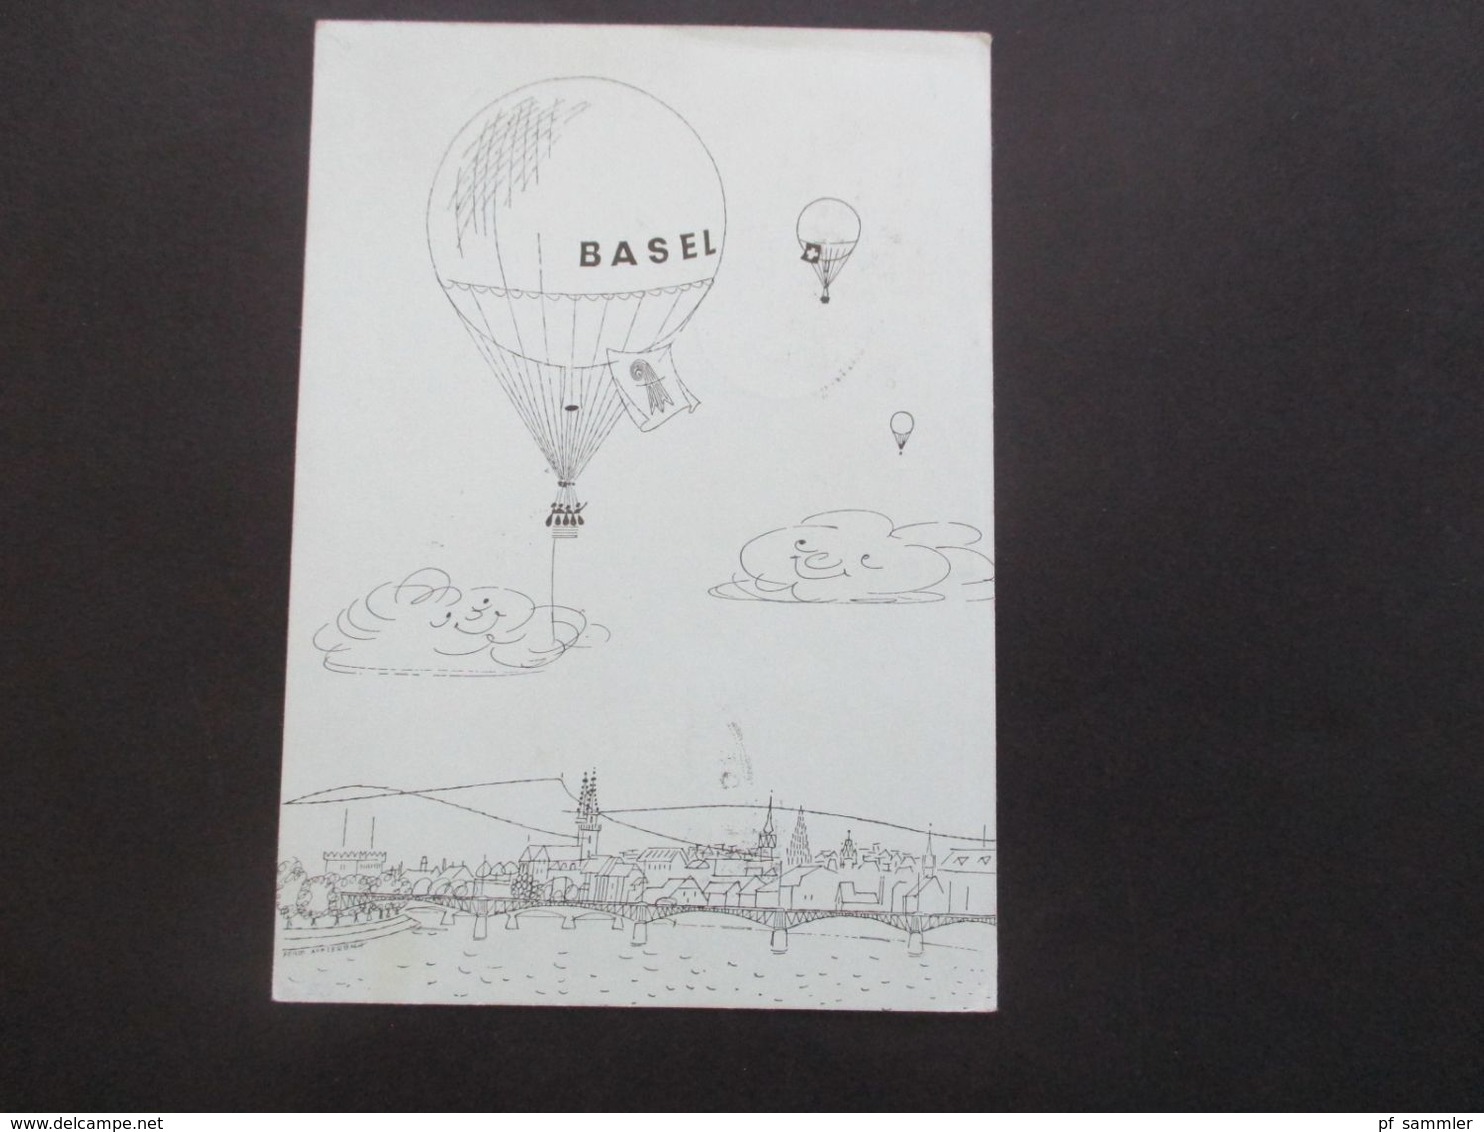 Schweiz 1955 Künstler AK Fesselballon SST Mustermesse Basel Ballonaufstieg Und Ballon Basel 1955 In Die DDR Gesendet - Covers & Documents